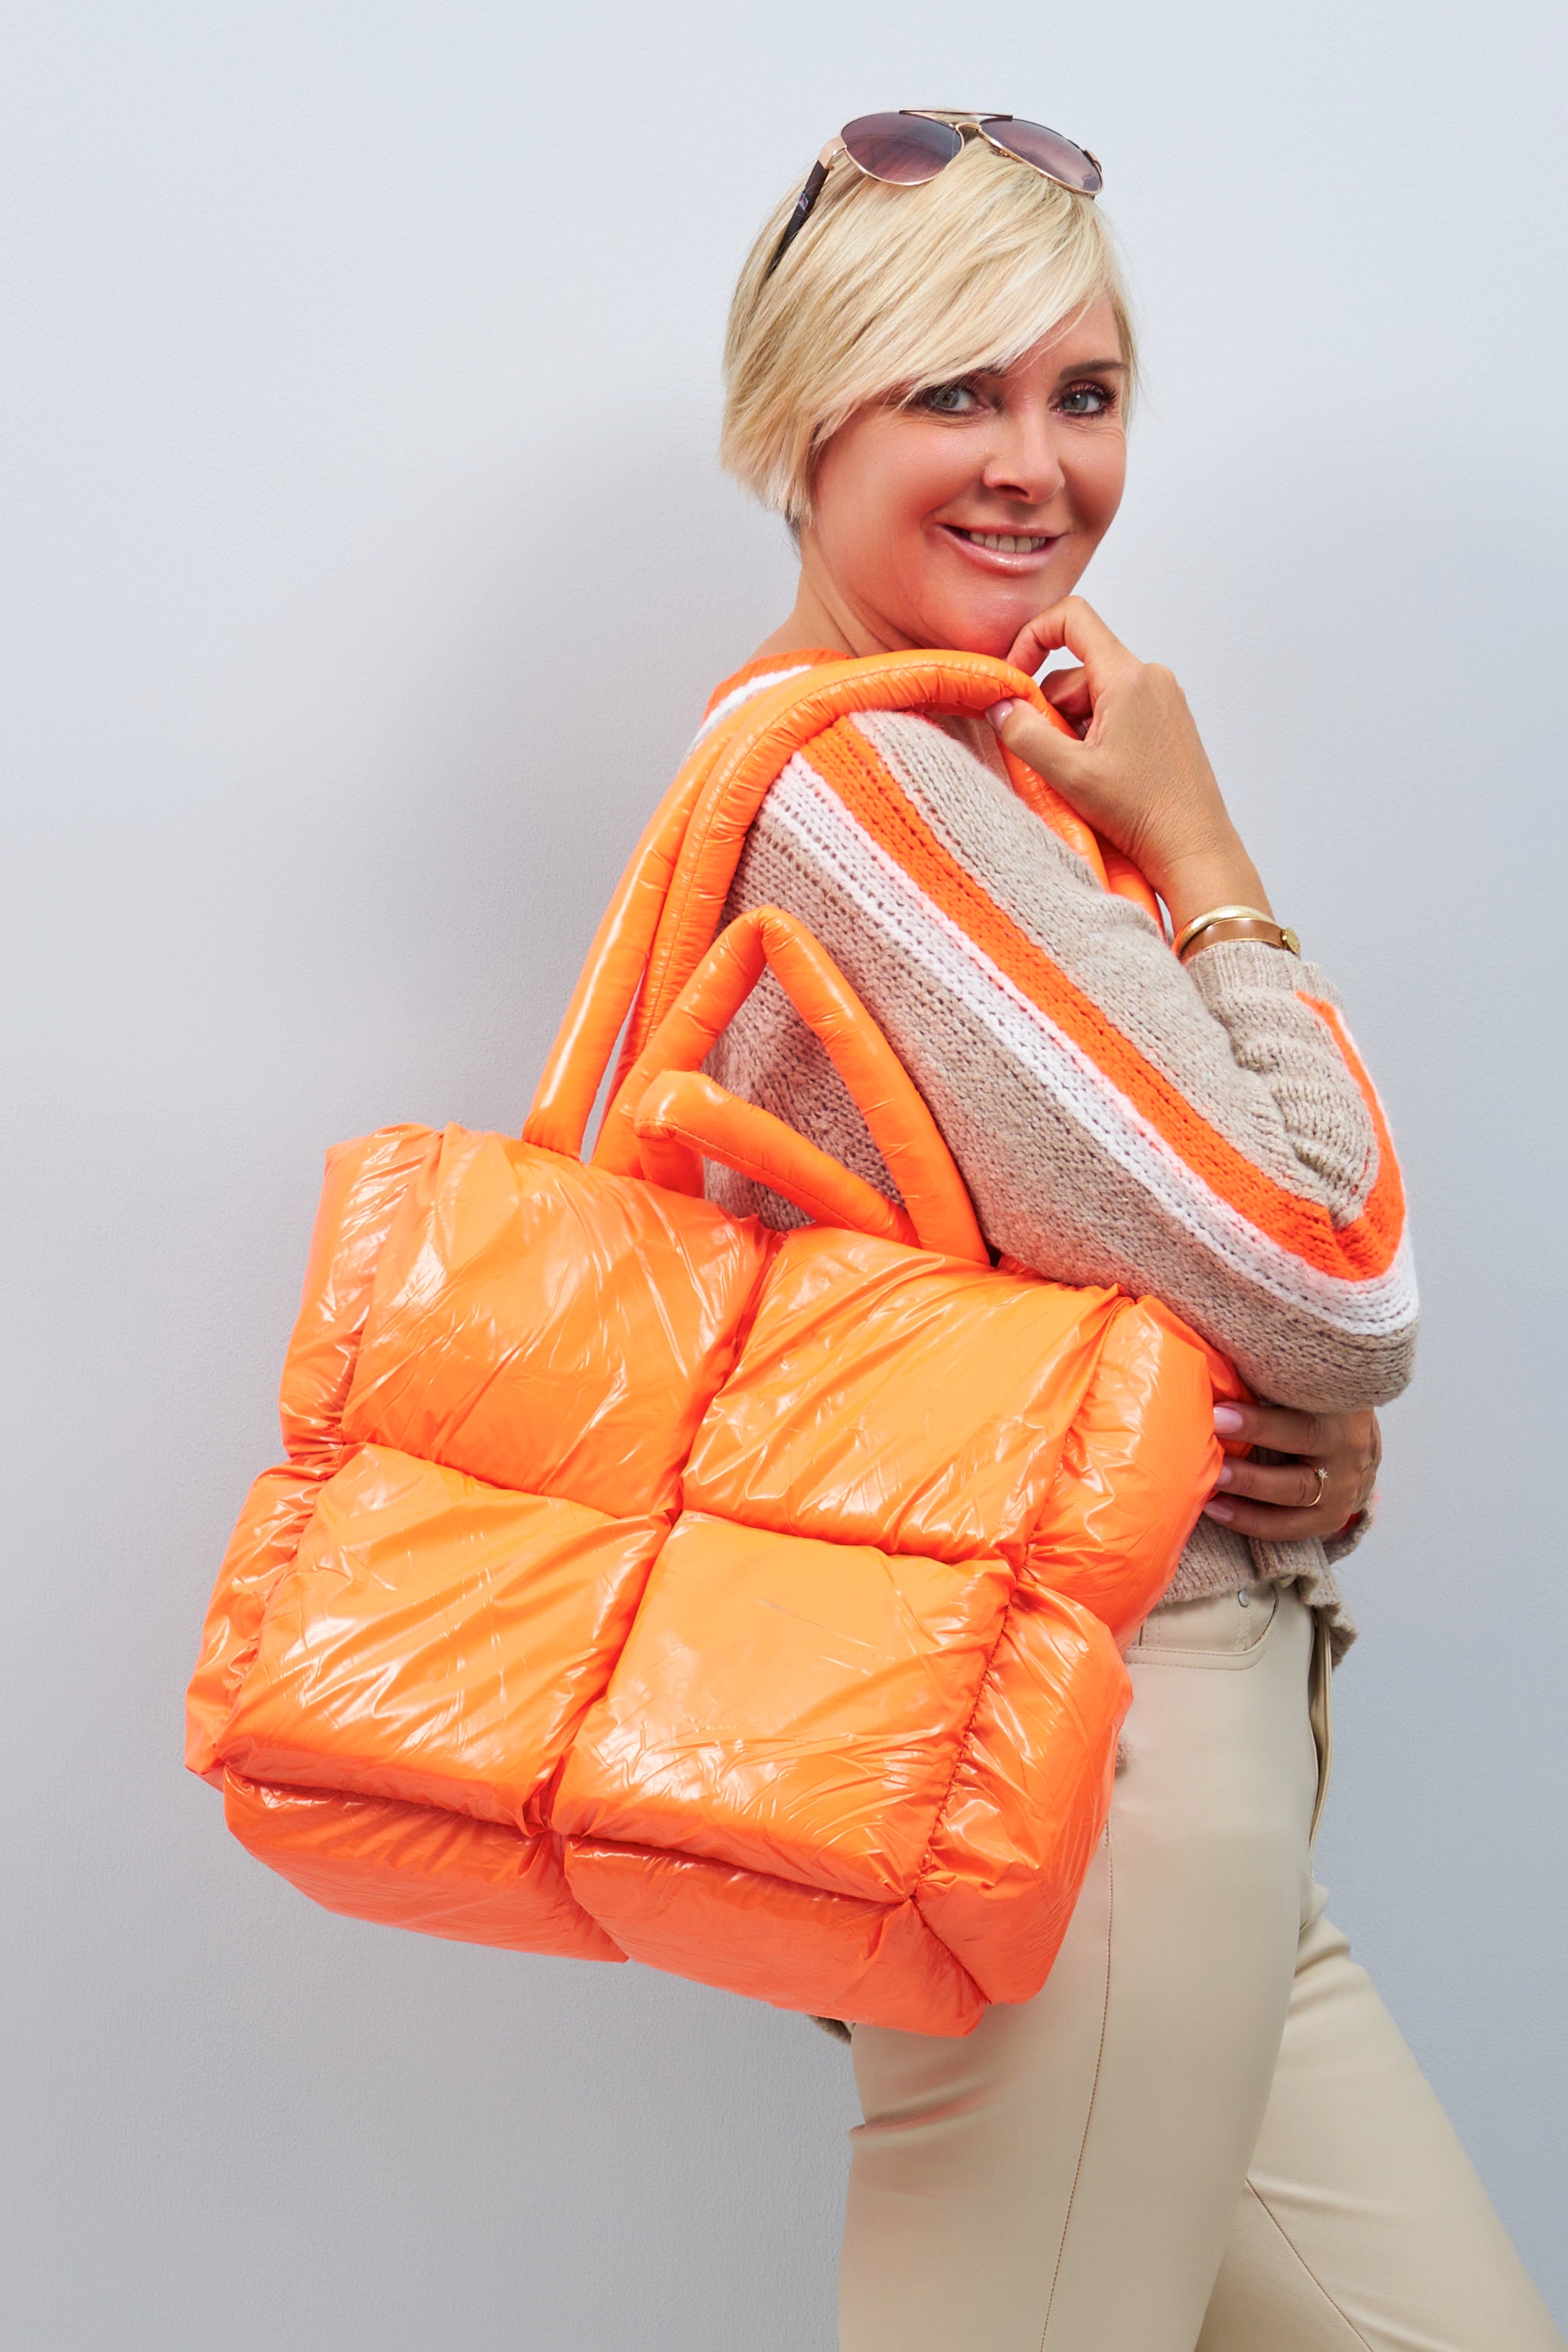 Quilted bag, orange